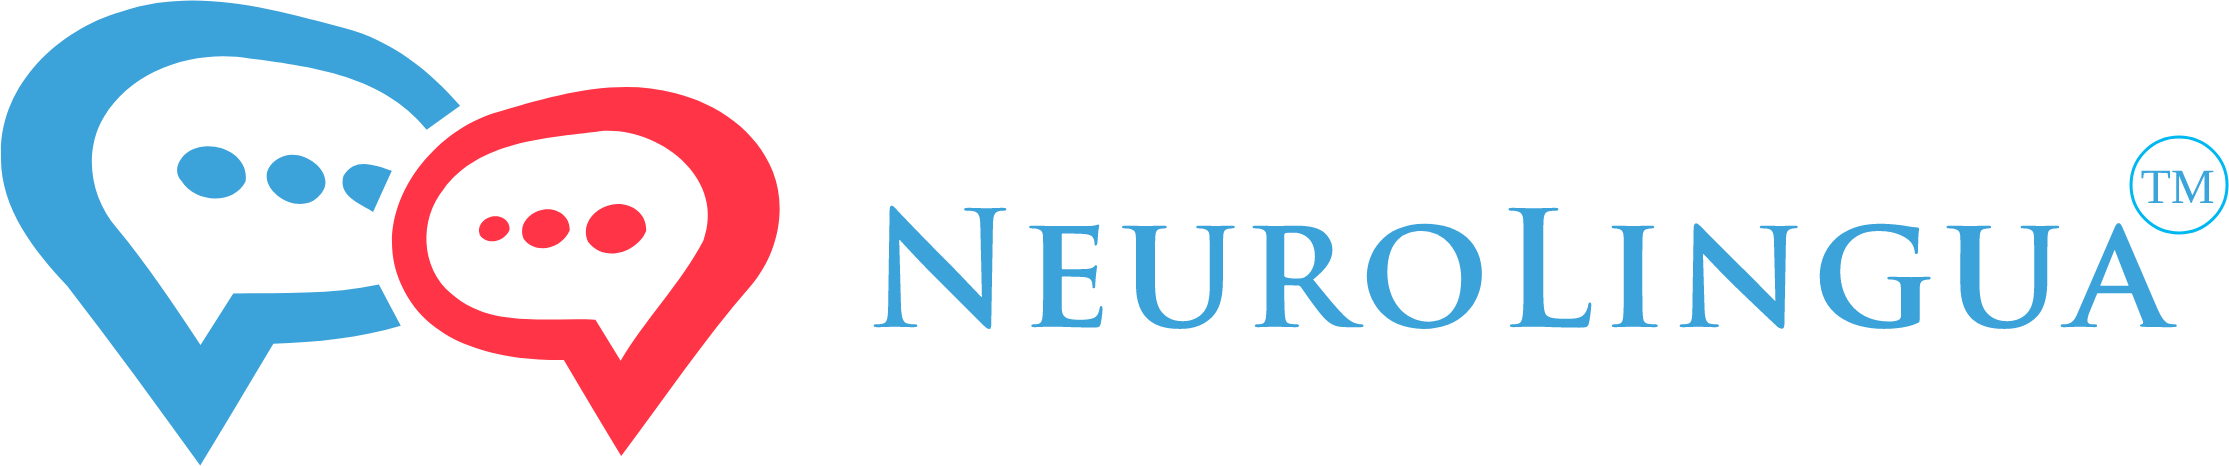 neurolingua logo